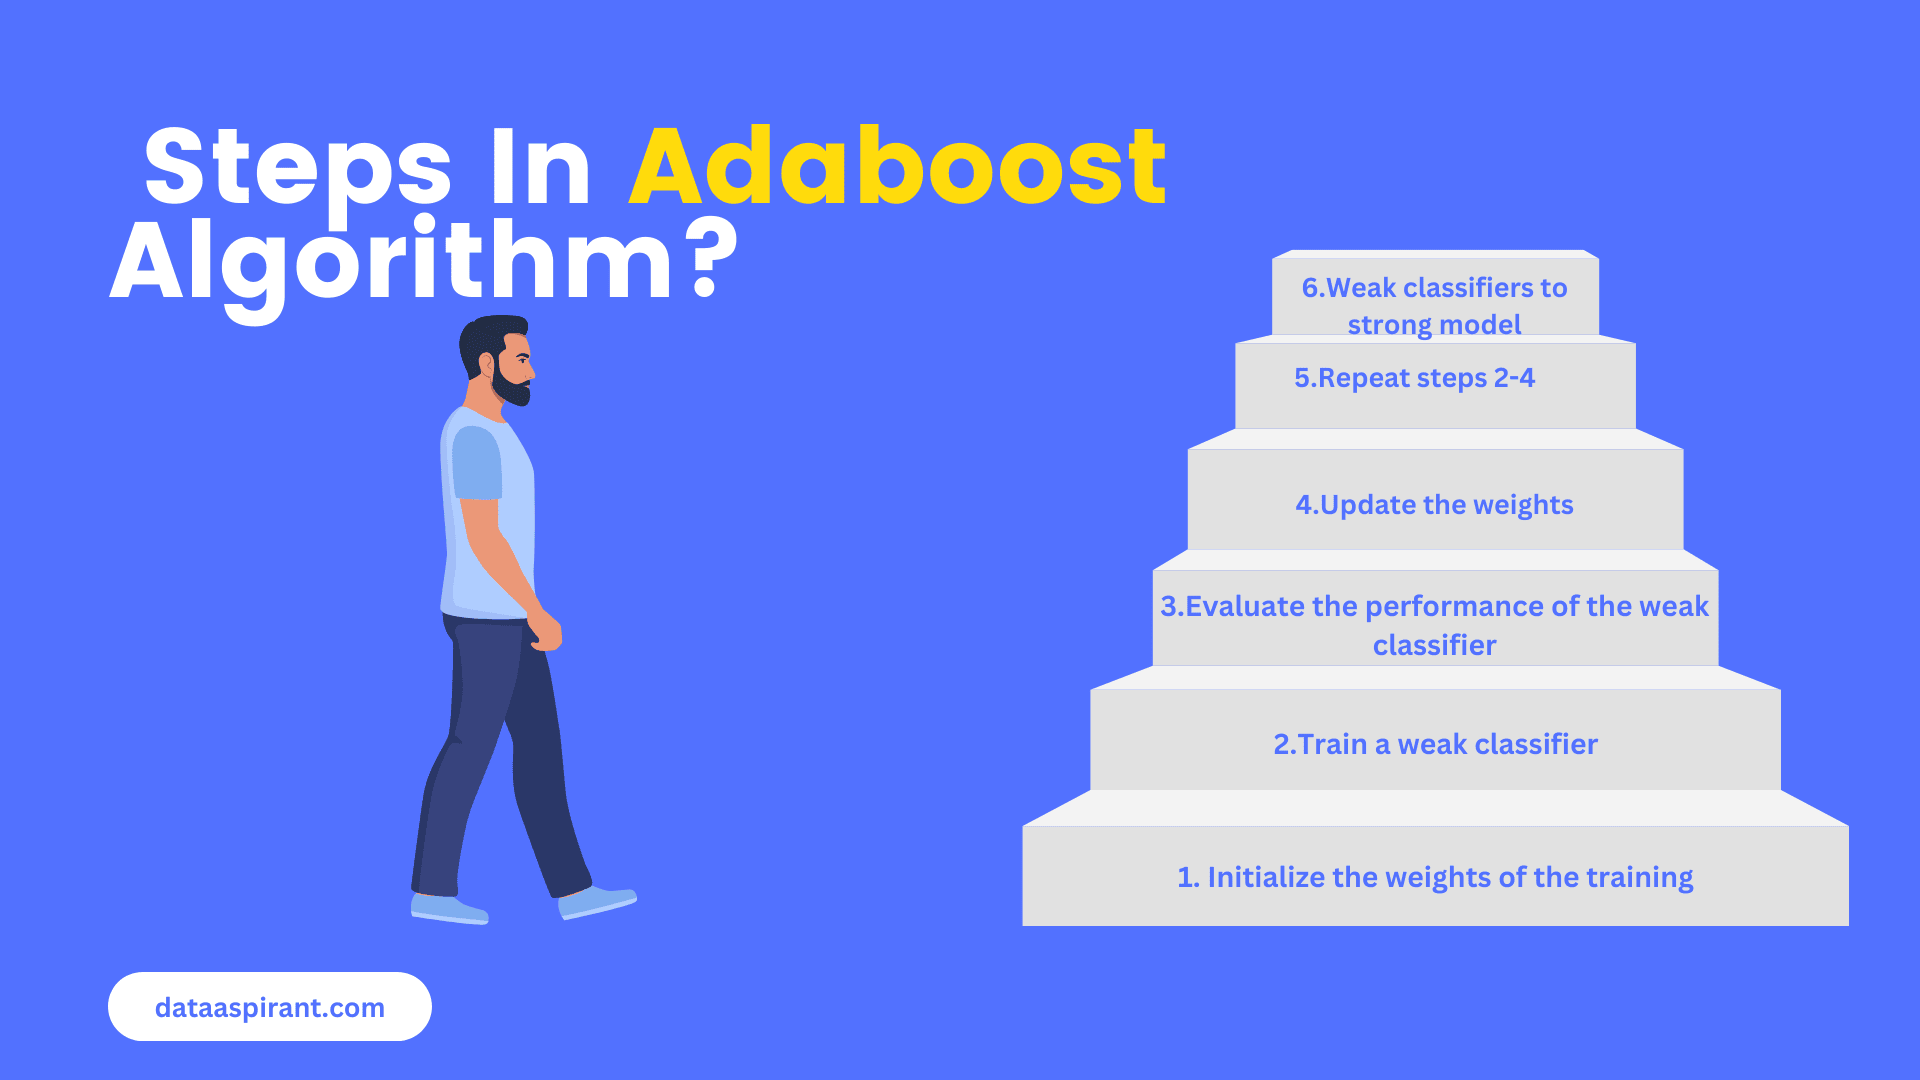 Adaboost Algorithm Step-by-Step Process